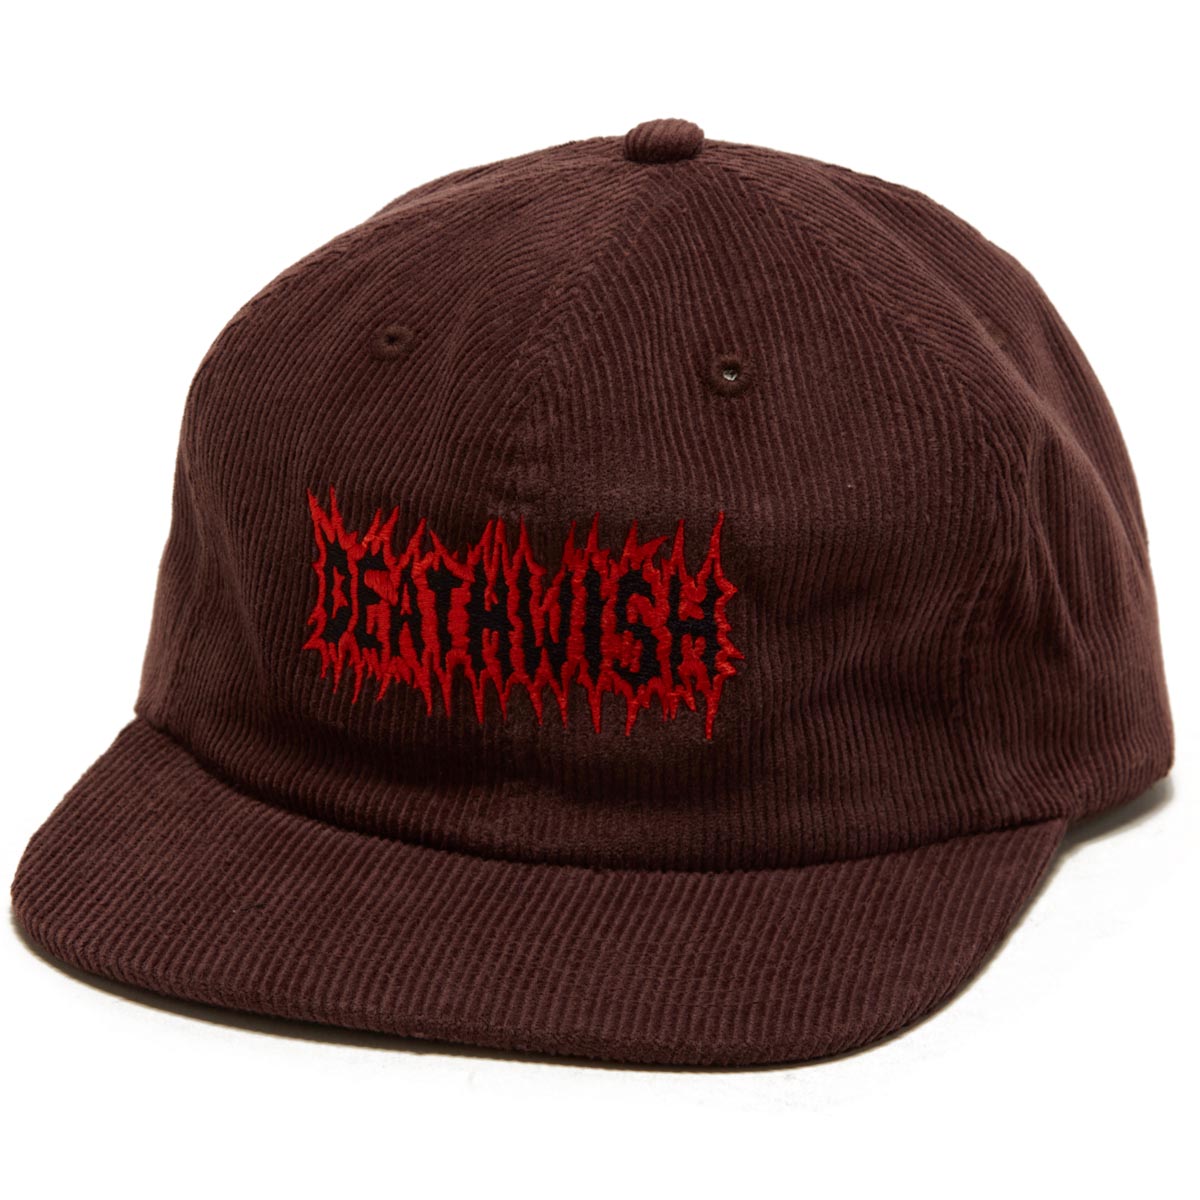 Deathwish Stomp Cord Snapback Hat - Brown image 1